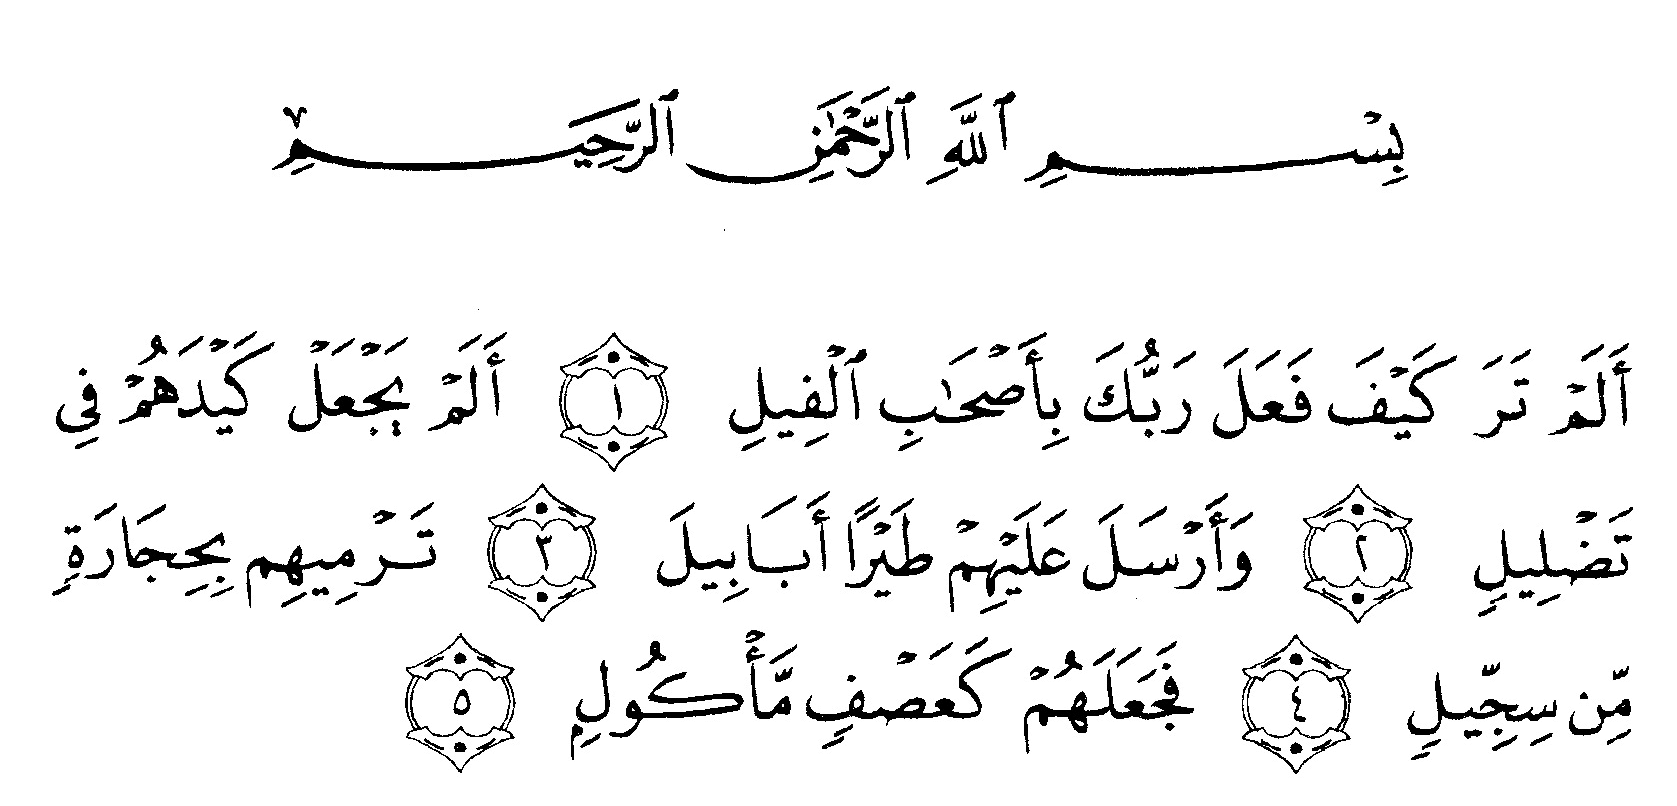 Surah al-fil